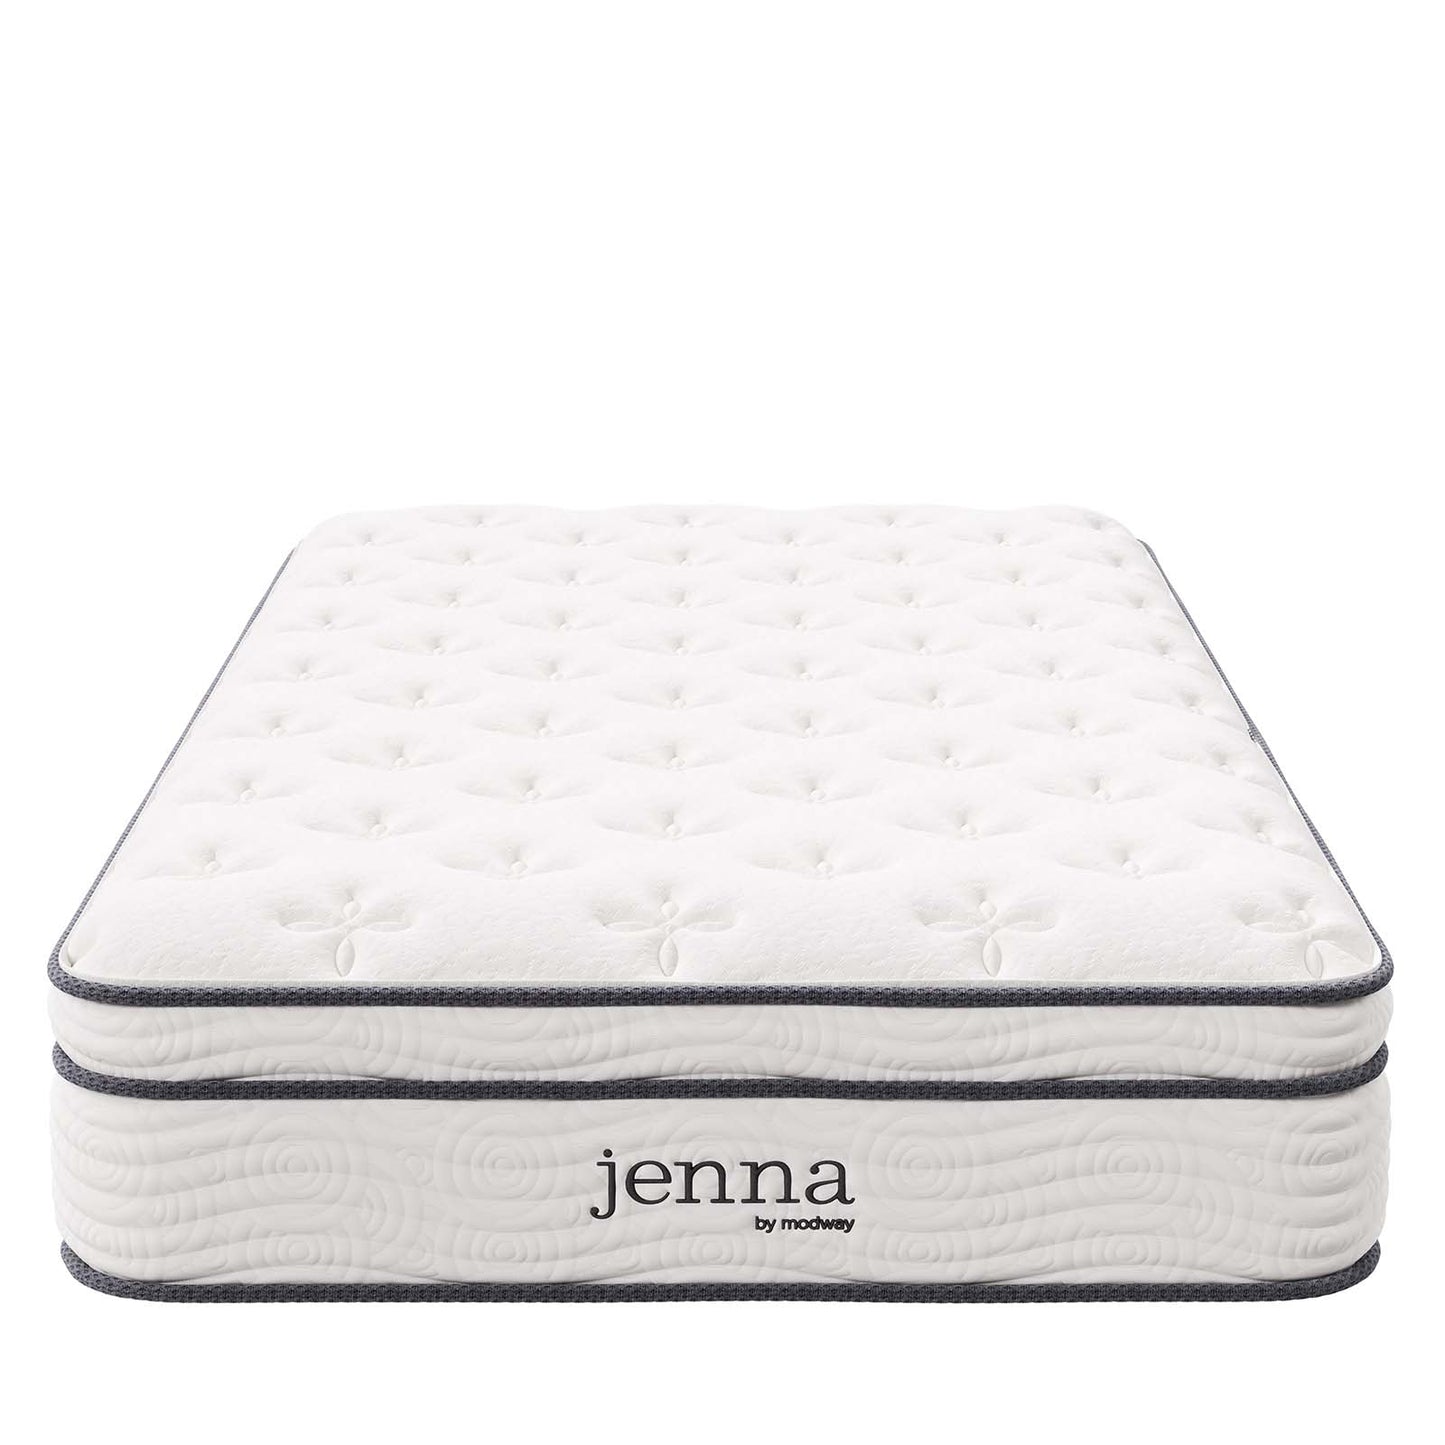 Jenna 10" Innerspring and Foam Twin XL Mattress